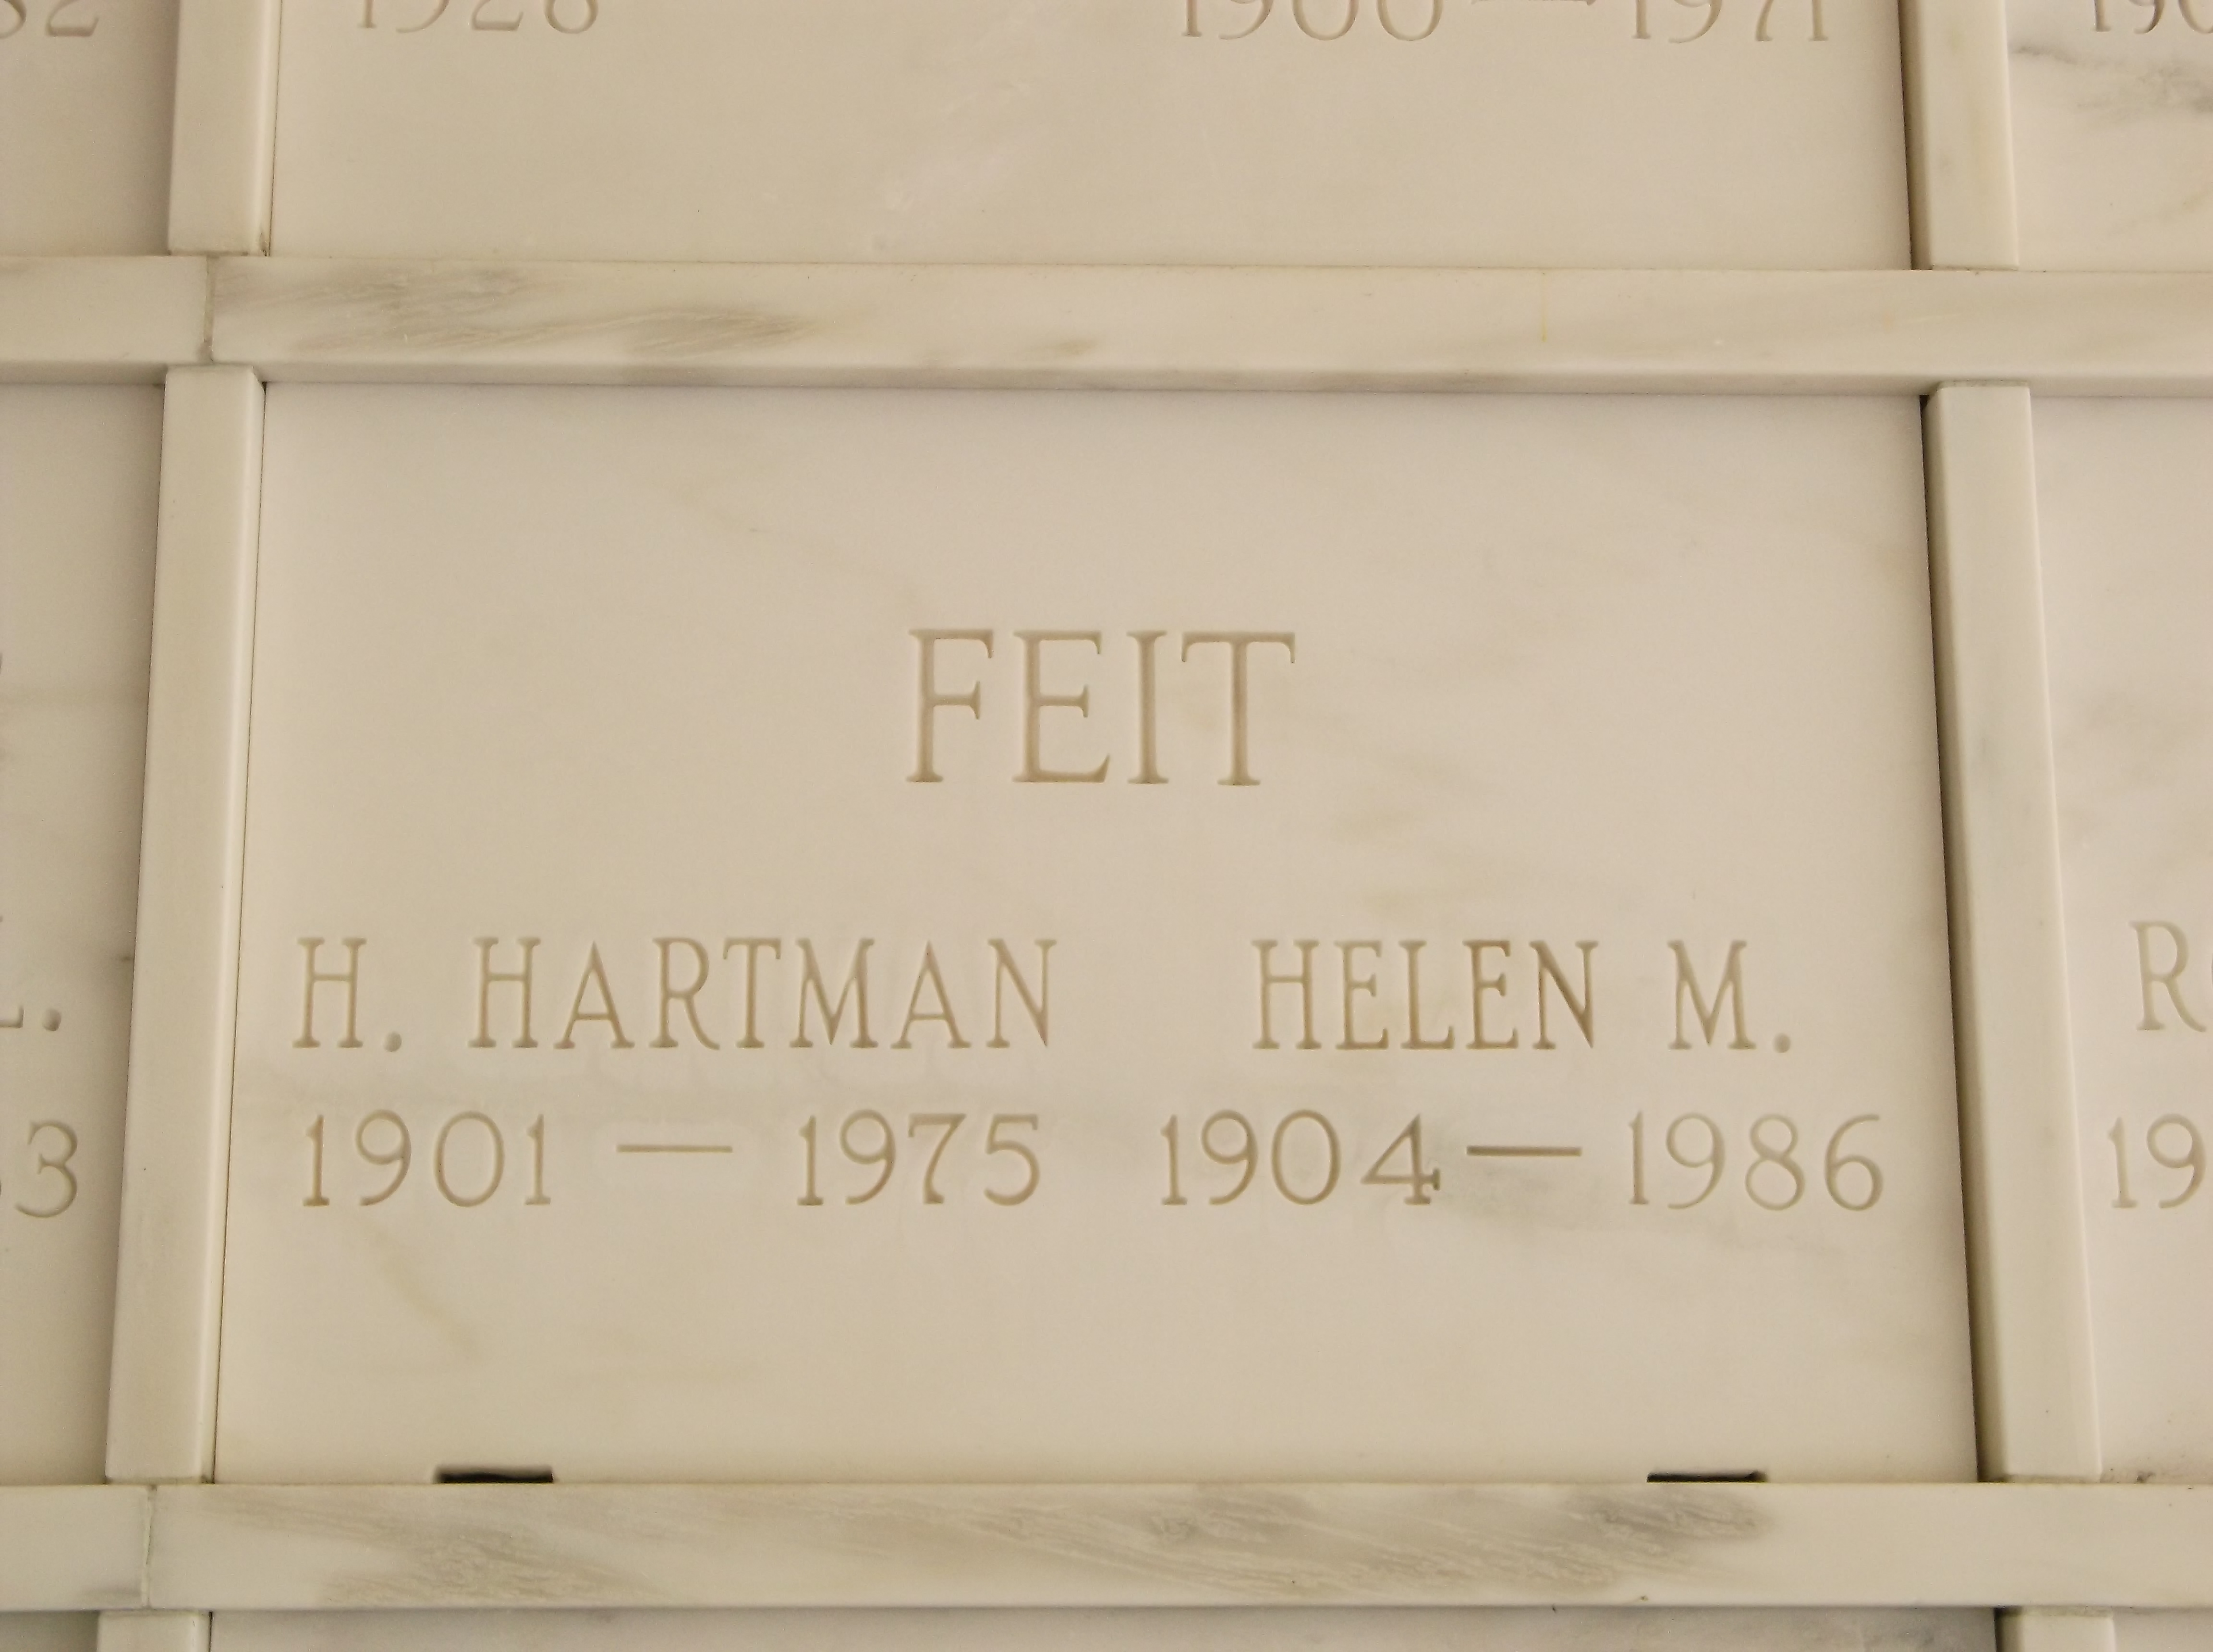 H Hartman Feit